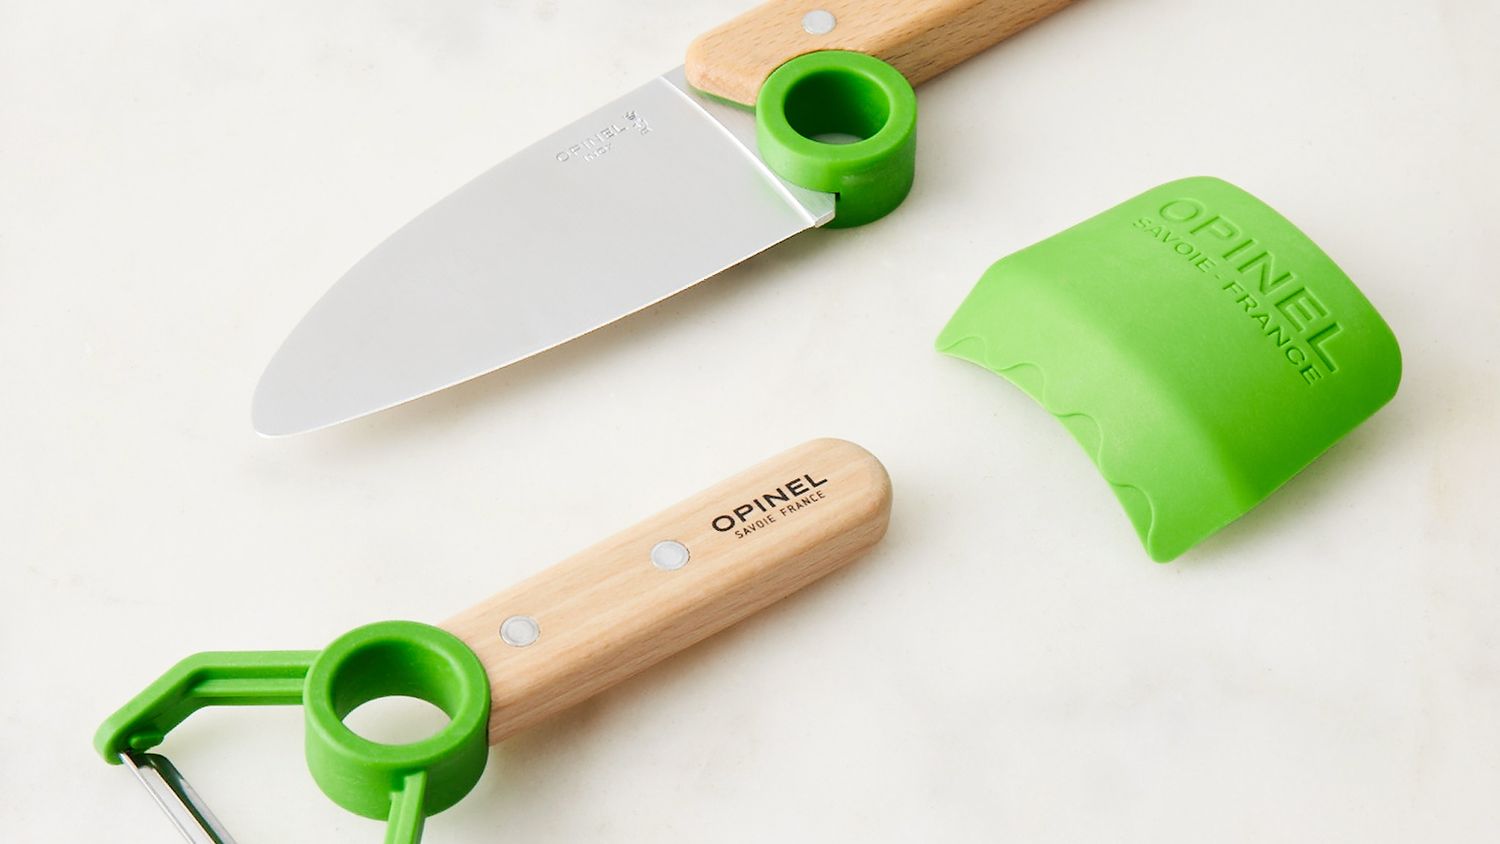 Opinel Le Petit Chef Kids' Knife Set & Apron